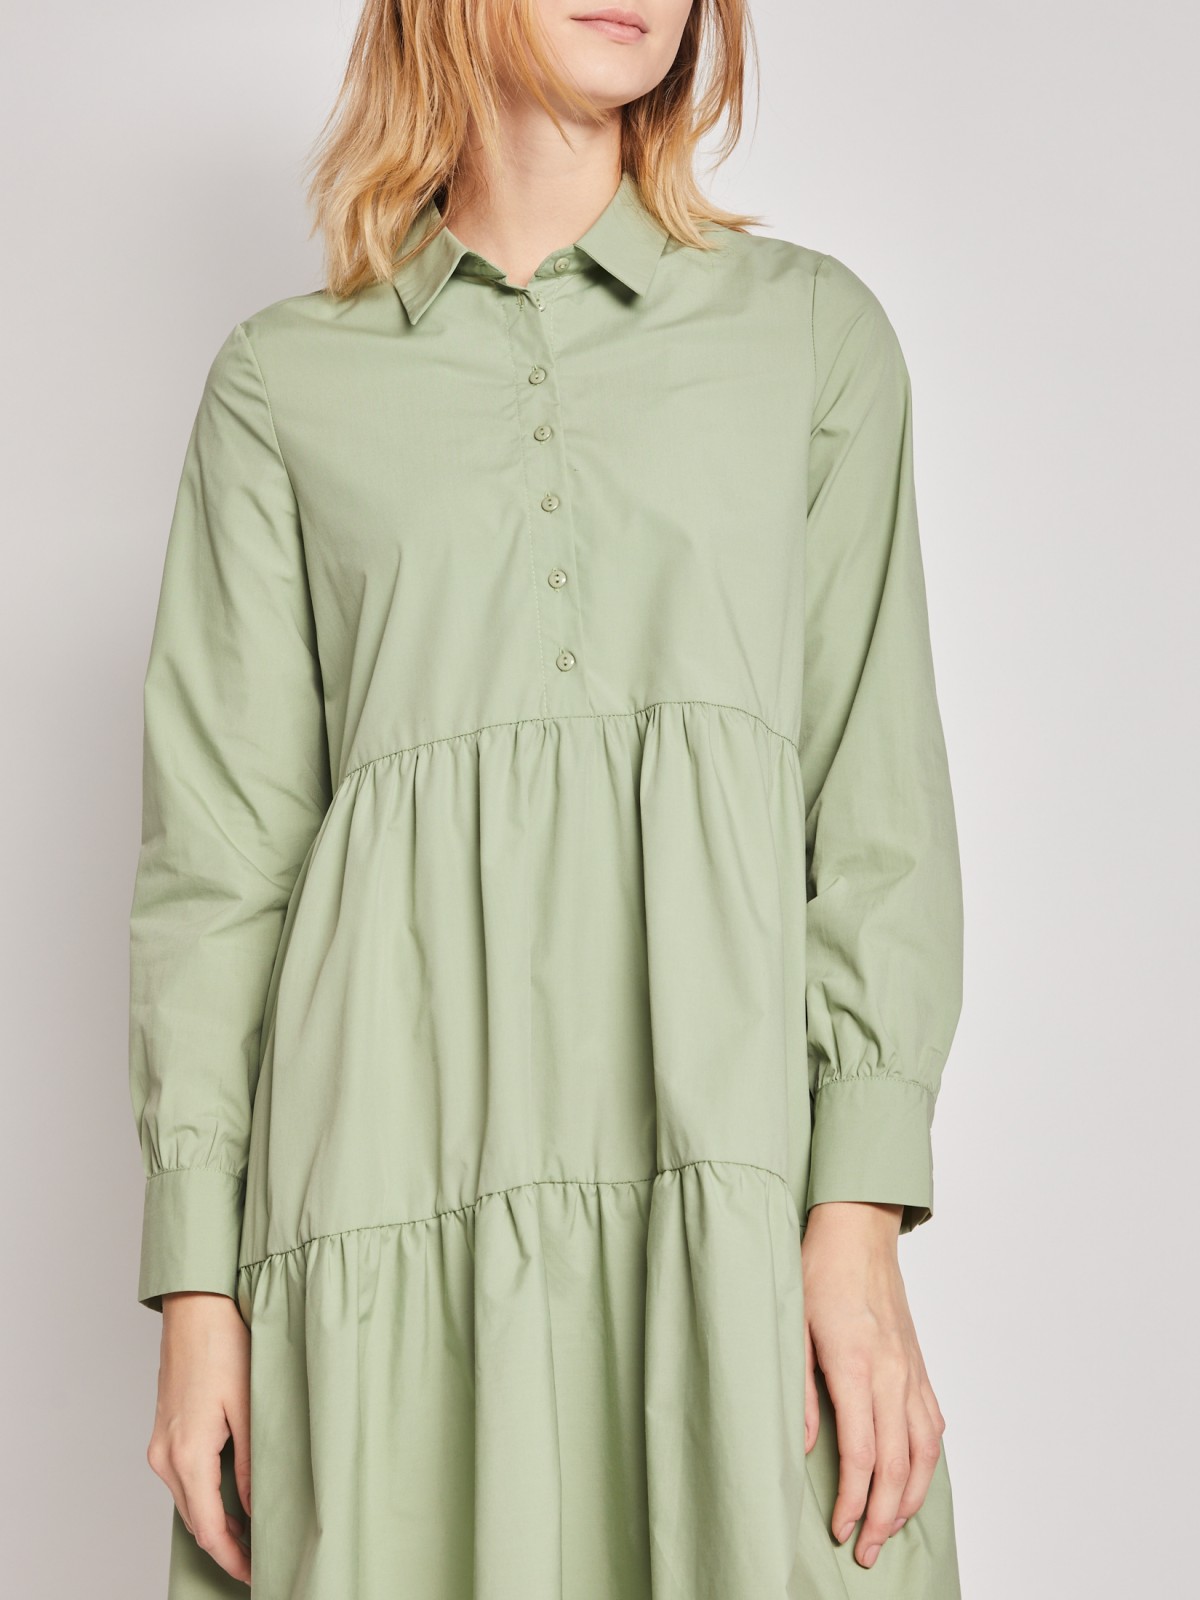 Ярусное платье-рубашка zolla 022138291223, цвет светло-зеленый, размер XS - фото 4